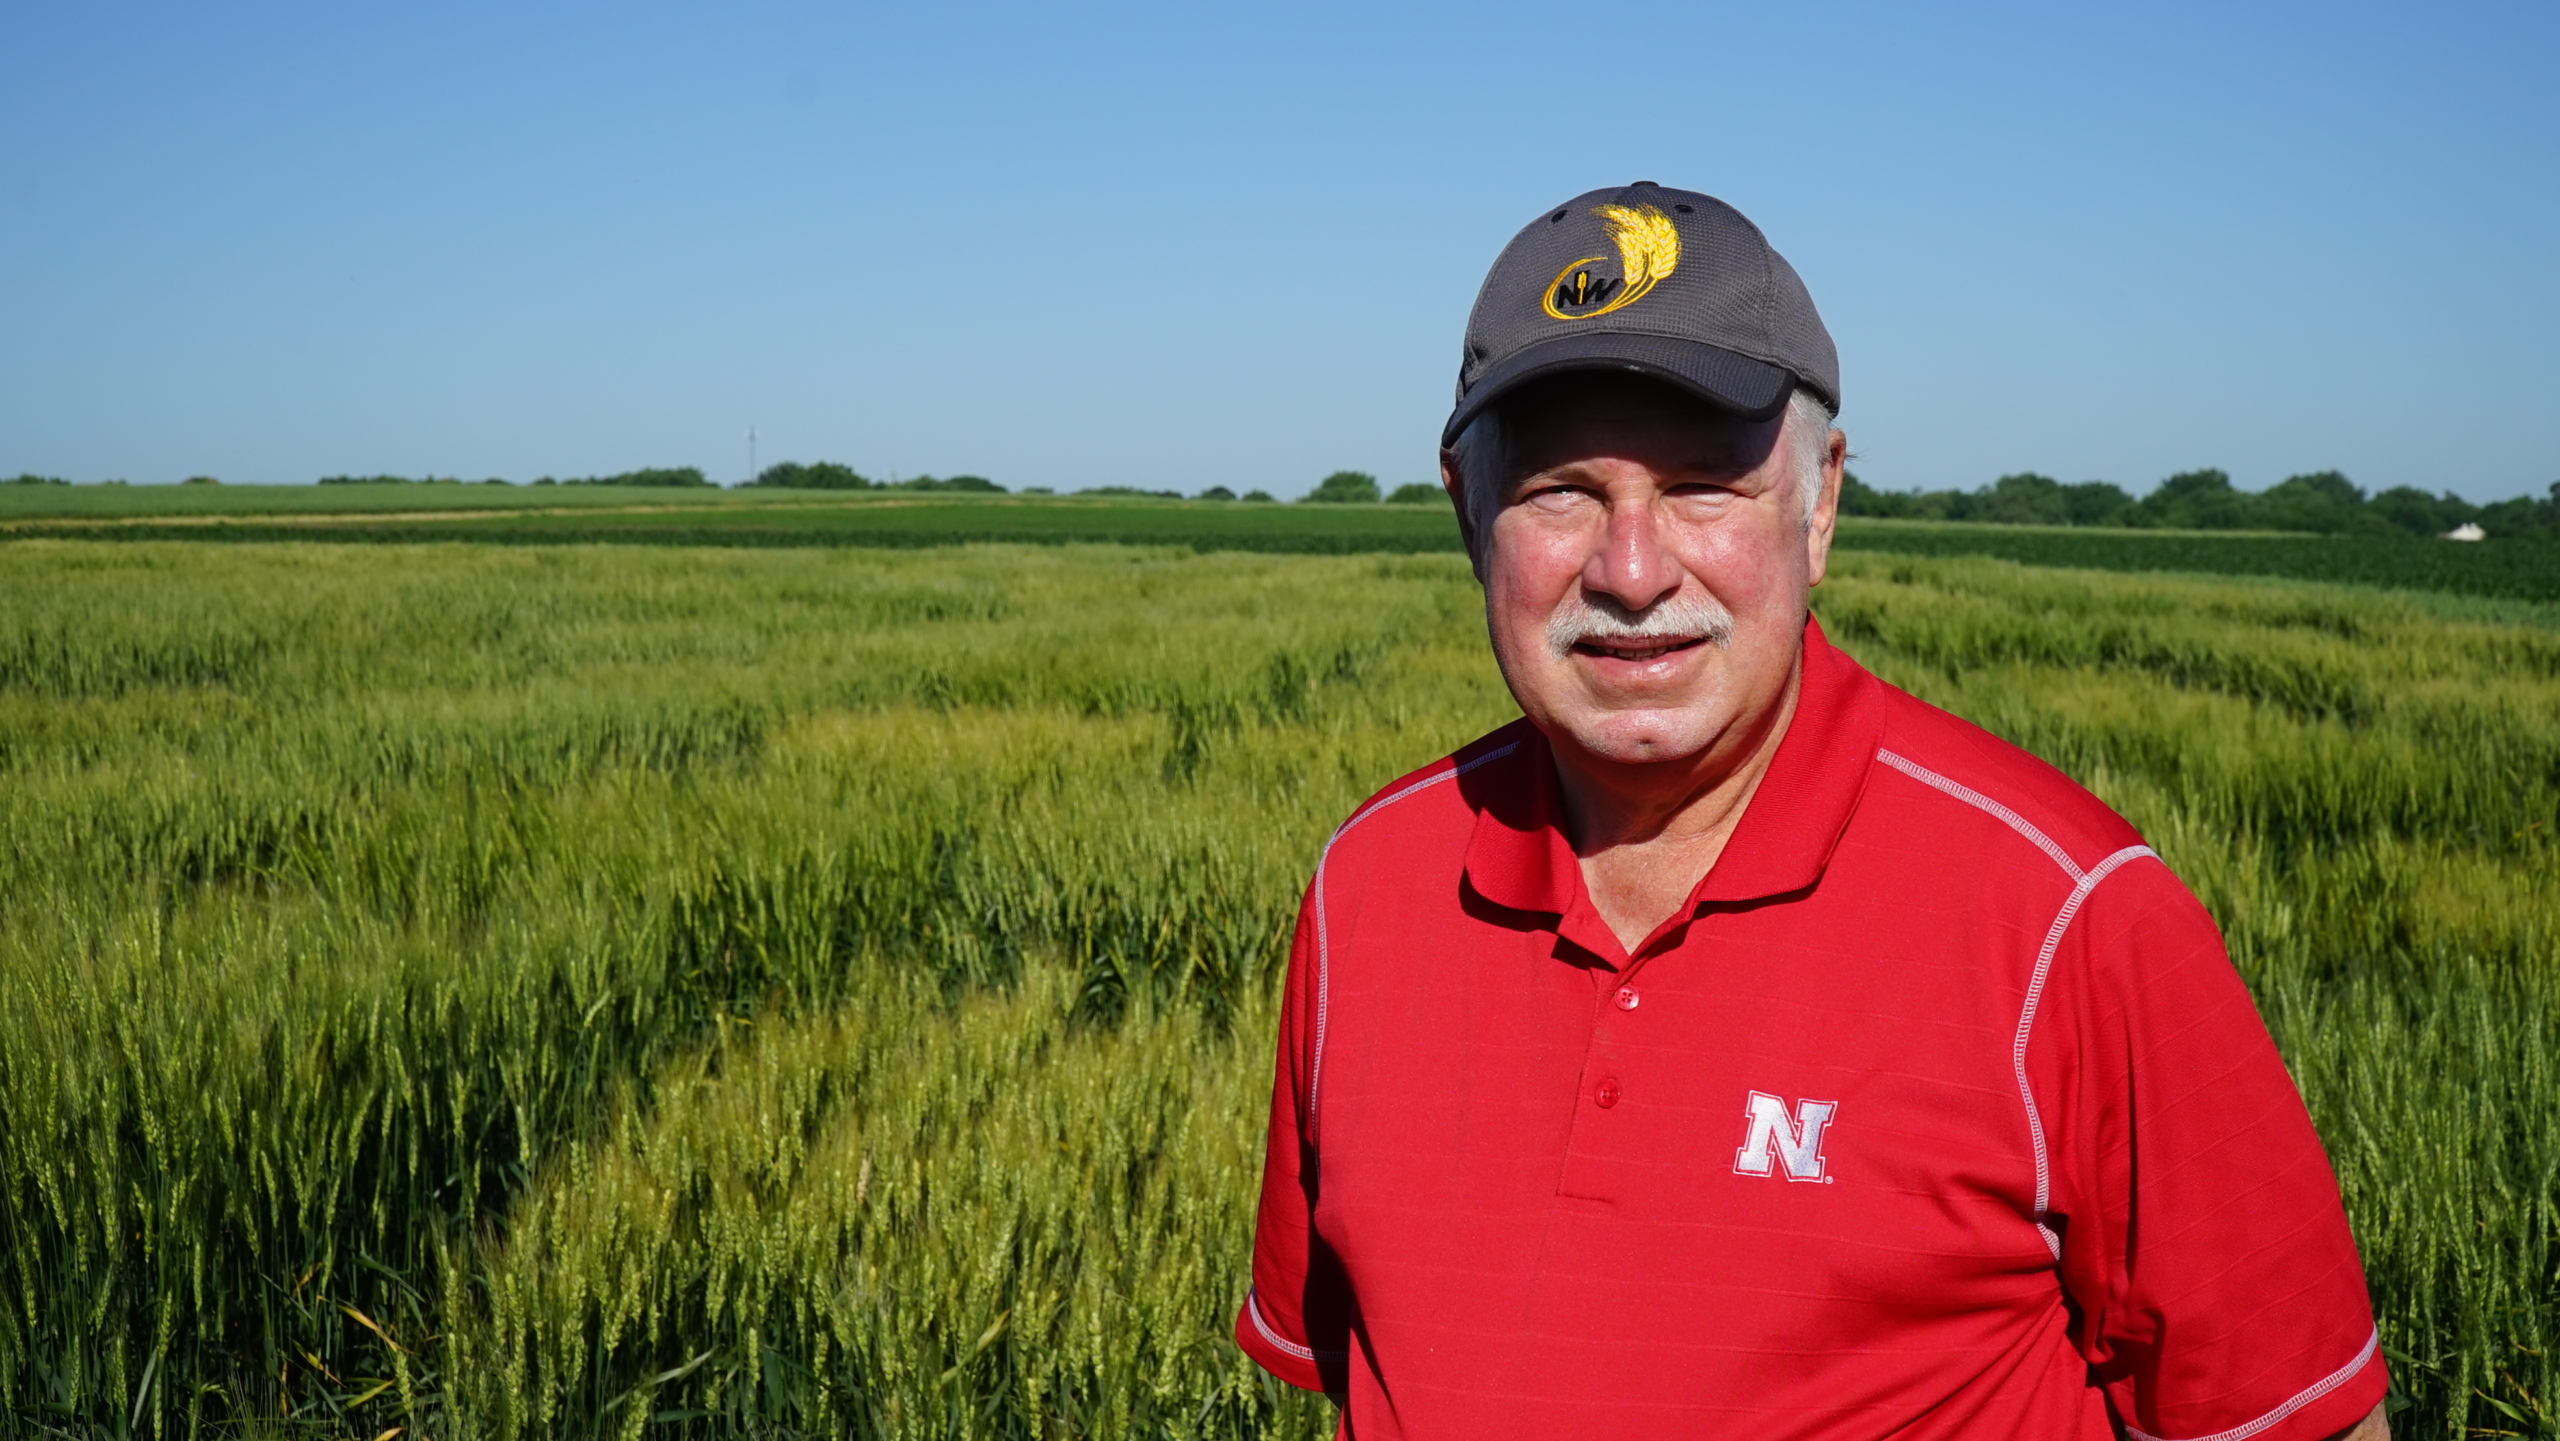 Dr. Stephen Baenziger leads Public Wheat Breeding Programs at University of Nebraska - Lincoln